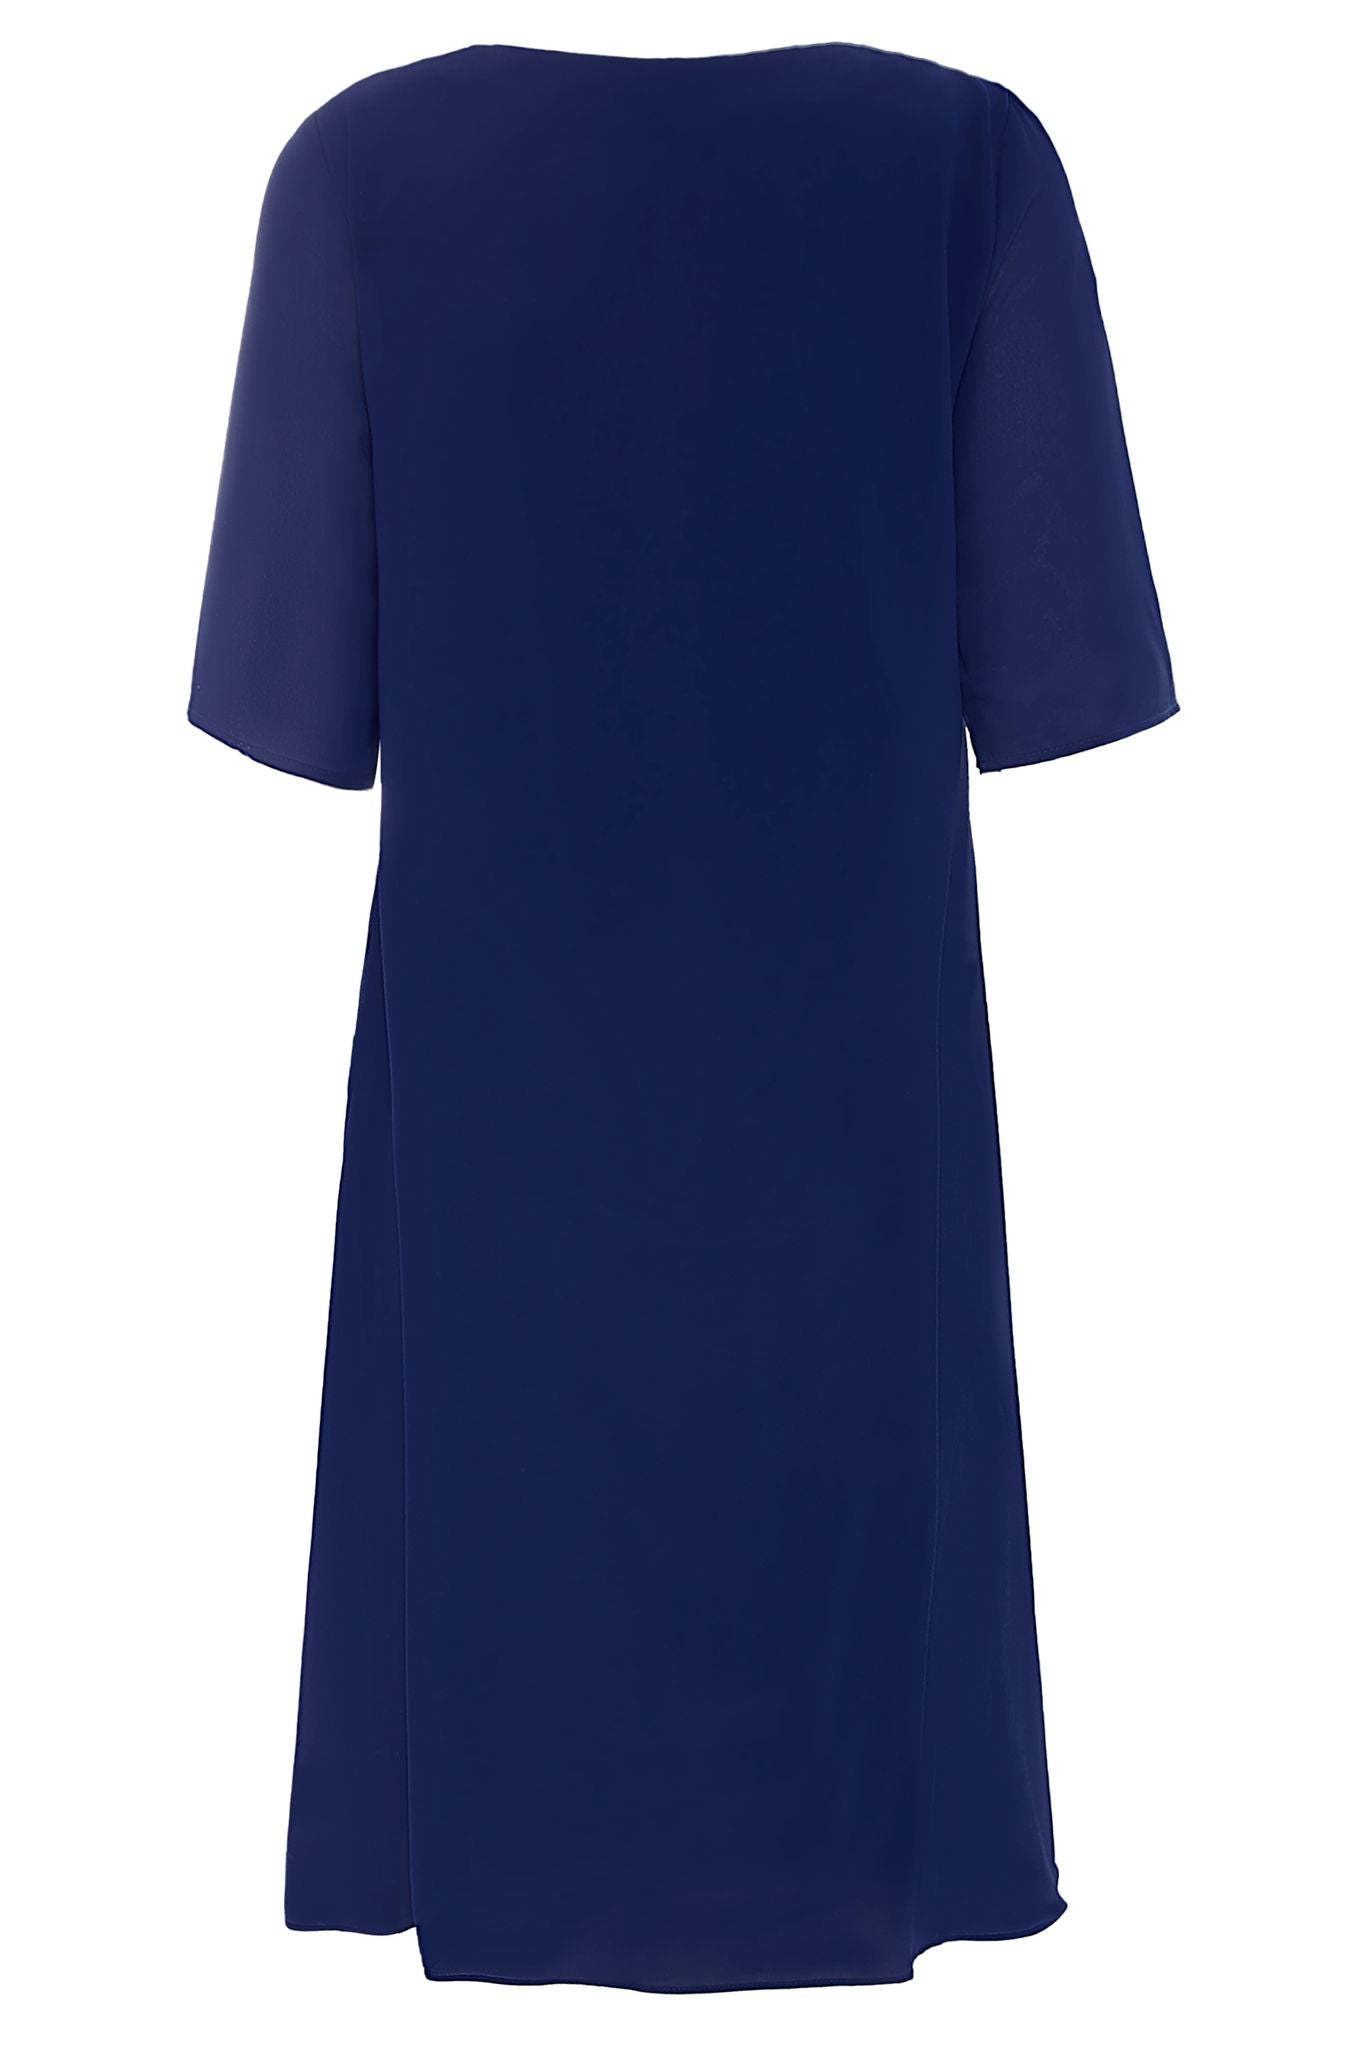 Dora Chiffon day dress in Royal Blue, back view